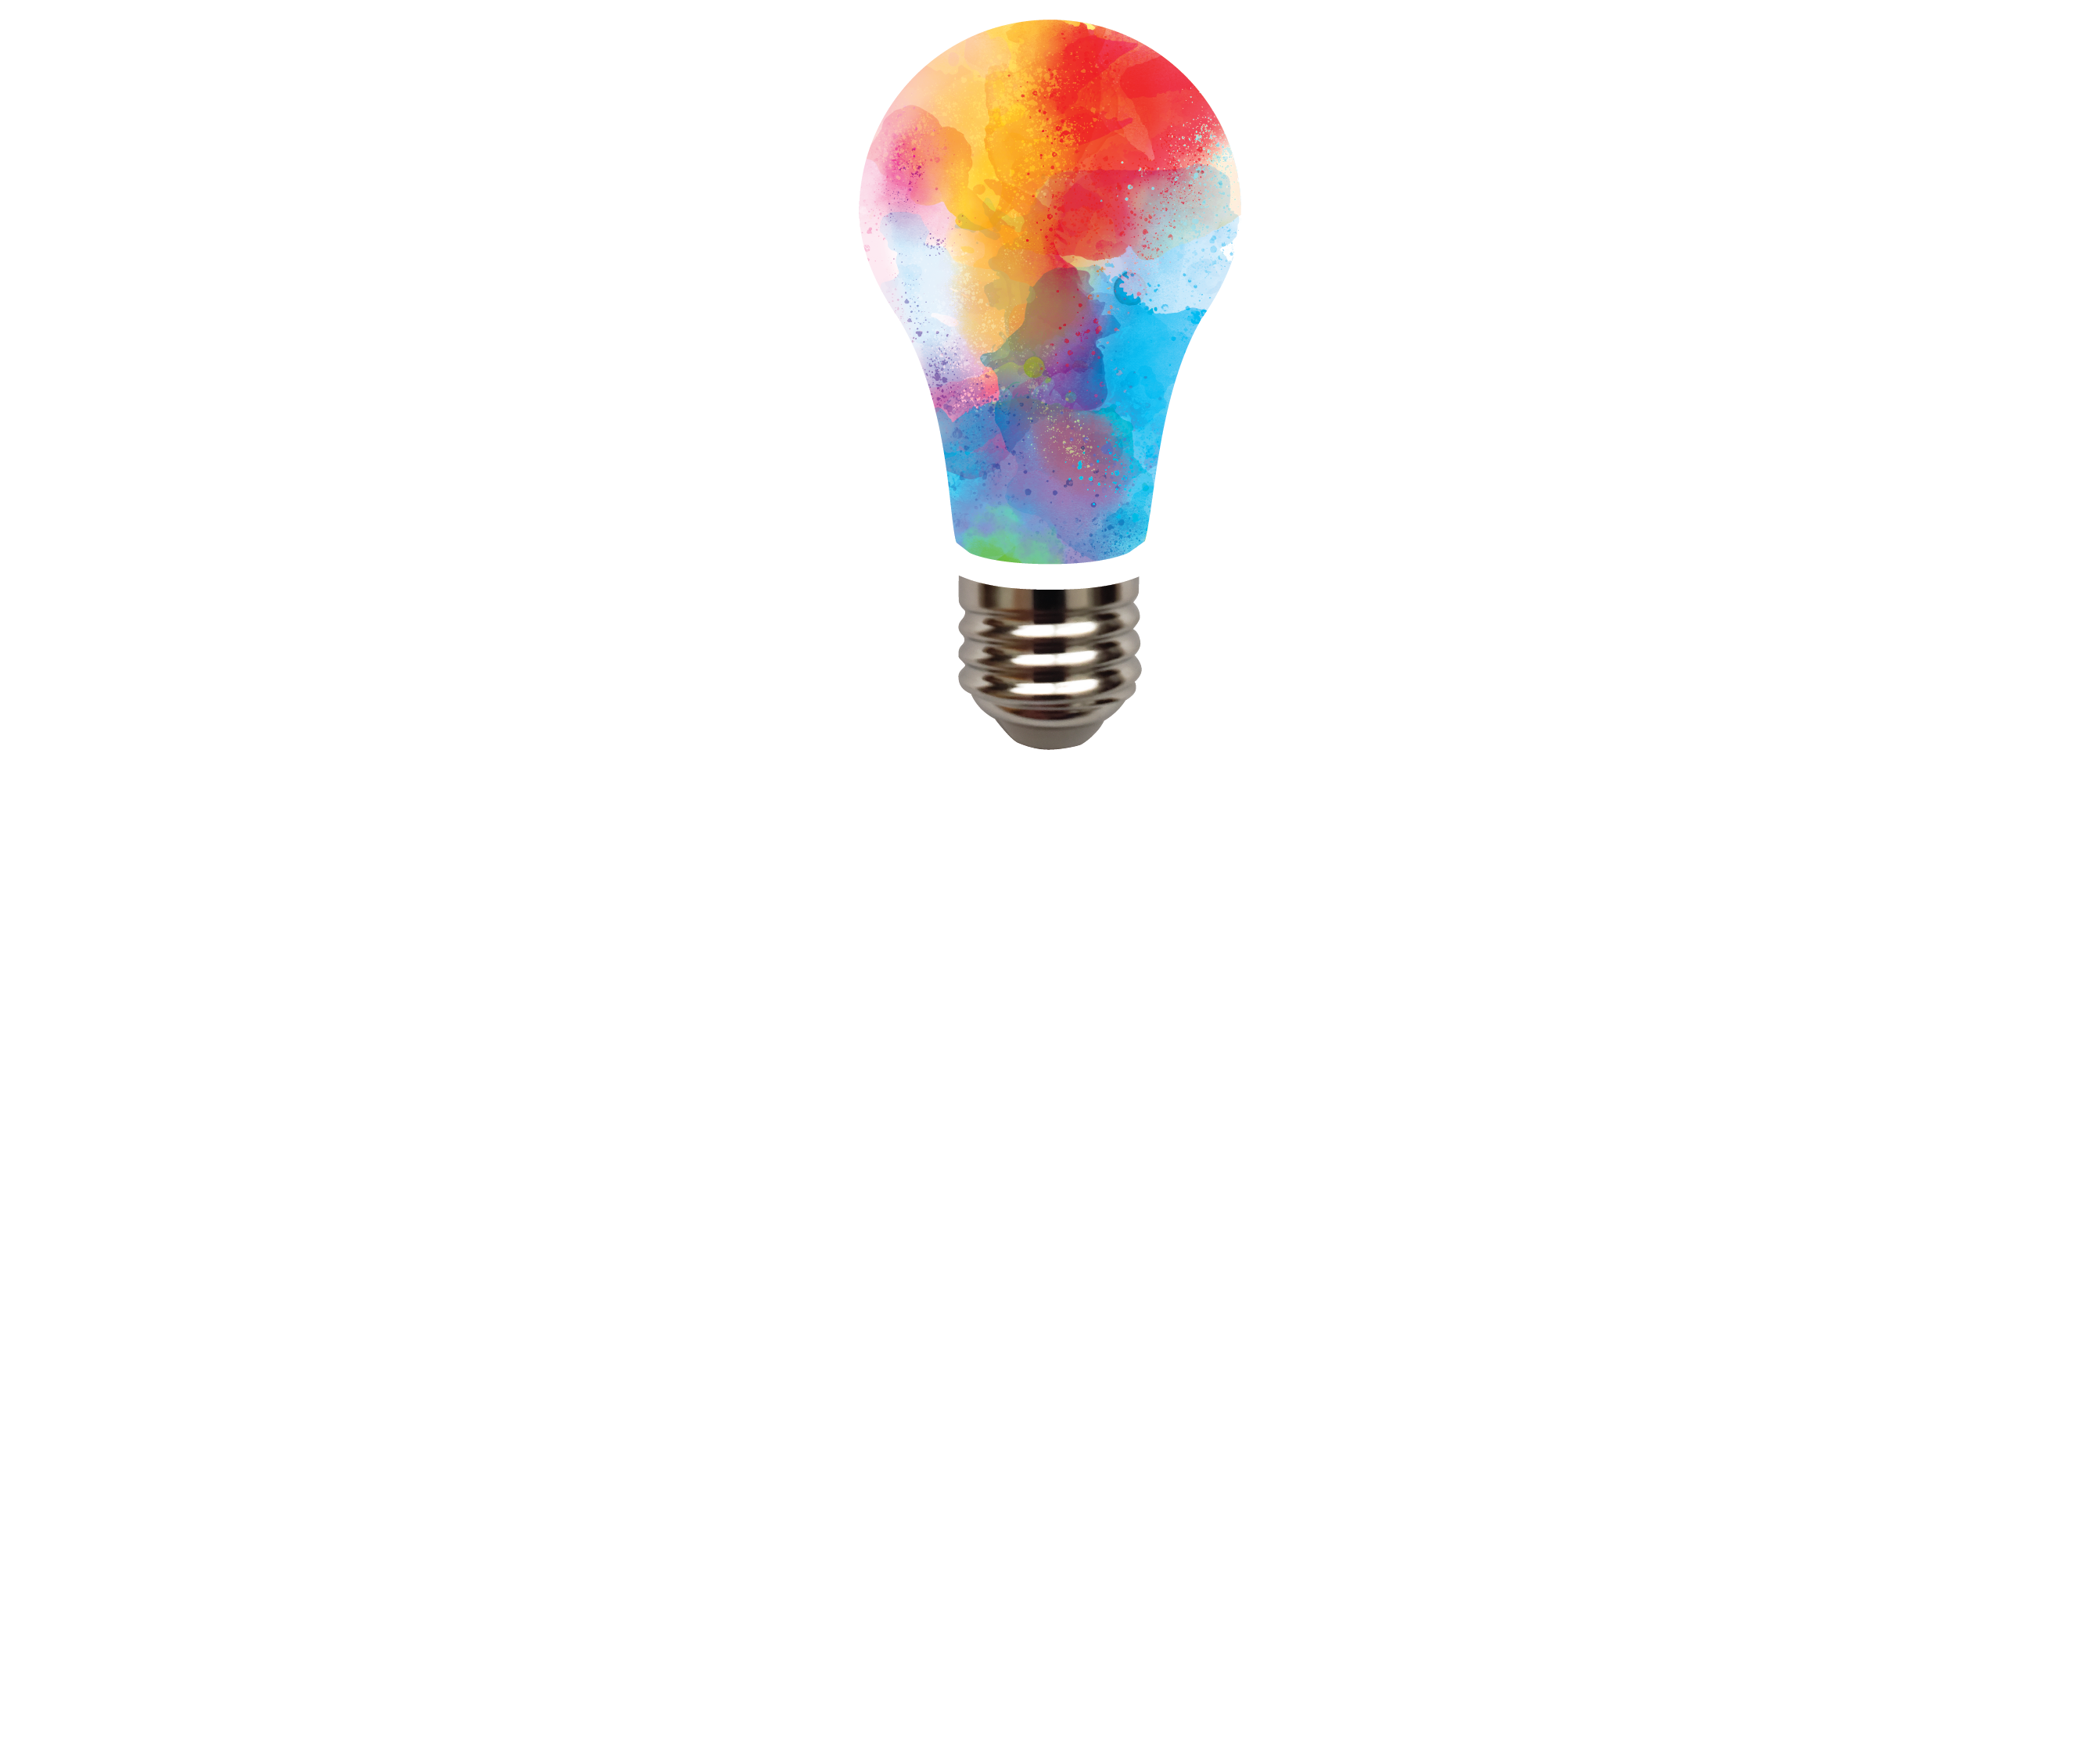 Creative Hiatus Productions